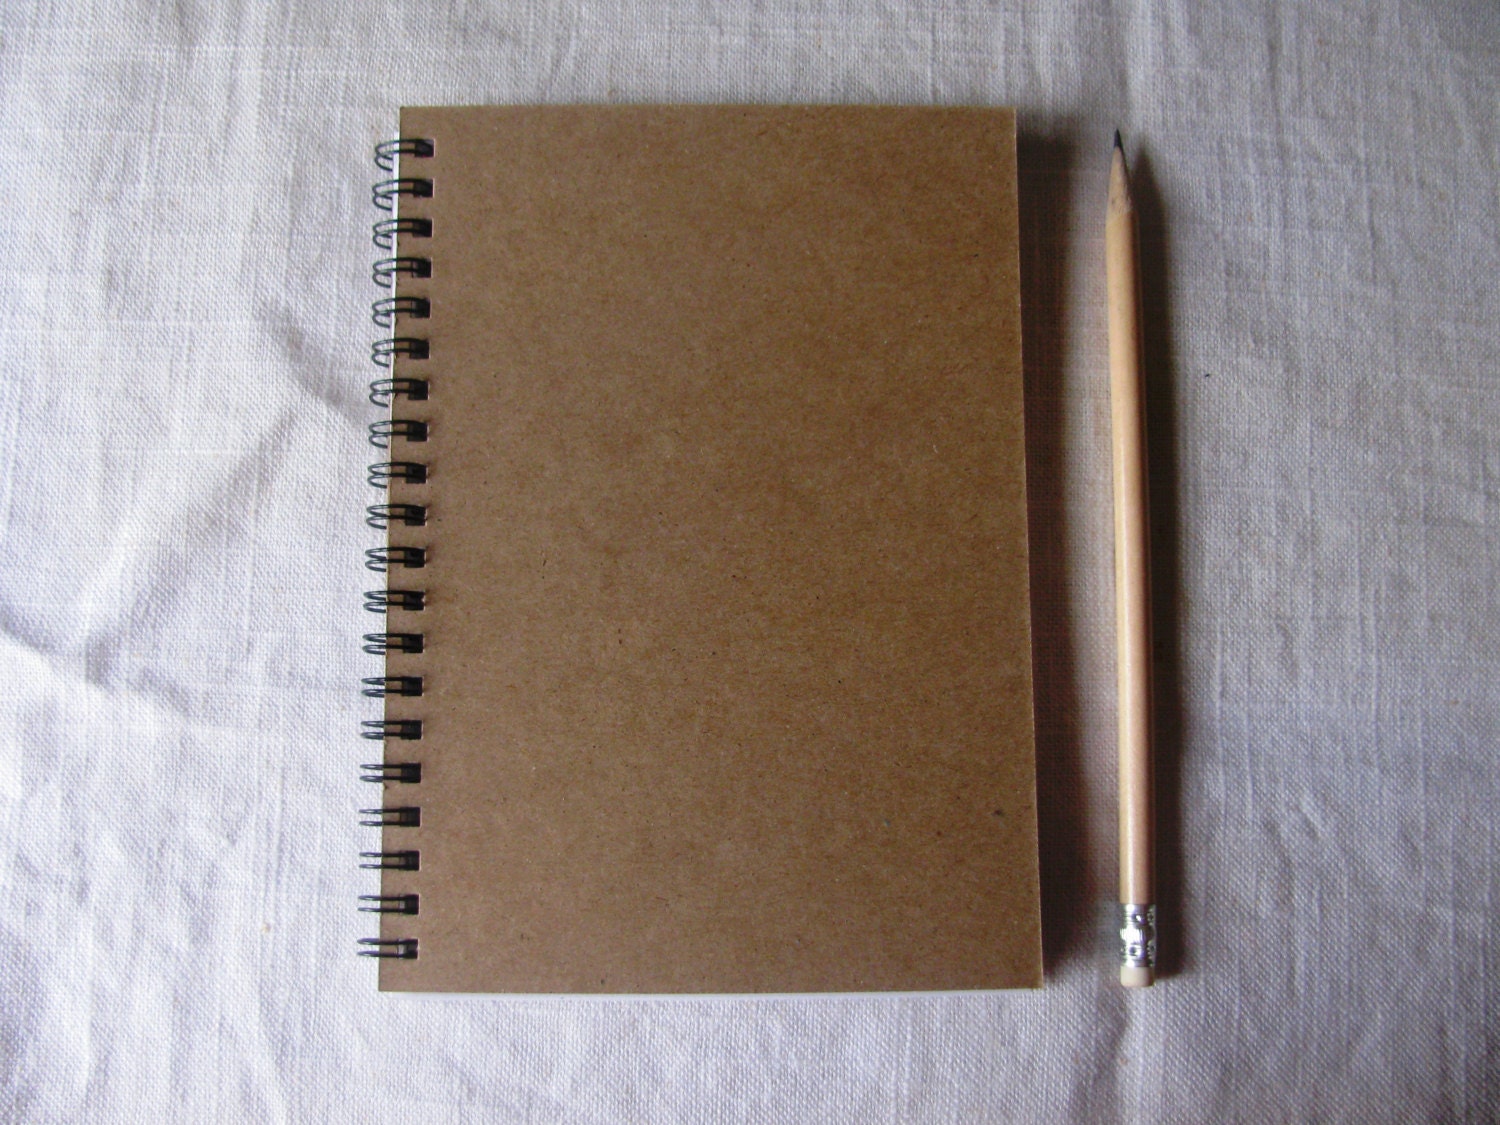 24 Pack Blank Journals for Kids, Bulk Sketchbooks for Students, Art,  Writing Stories, A5 Kraft Paper Notebooks (5.5 x 8.3 In)